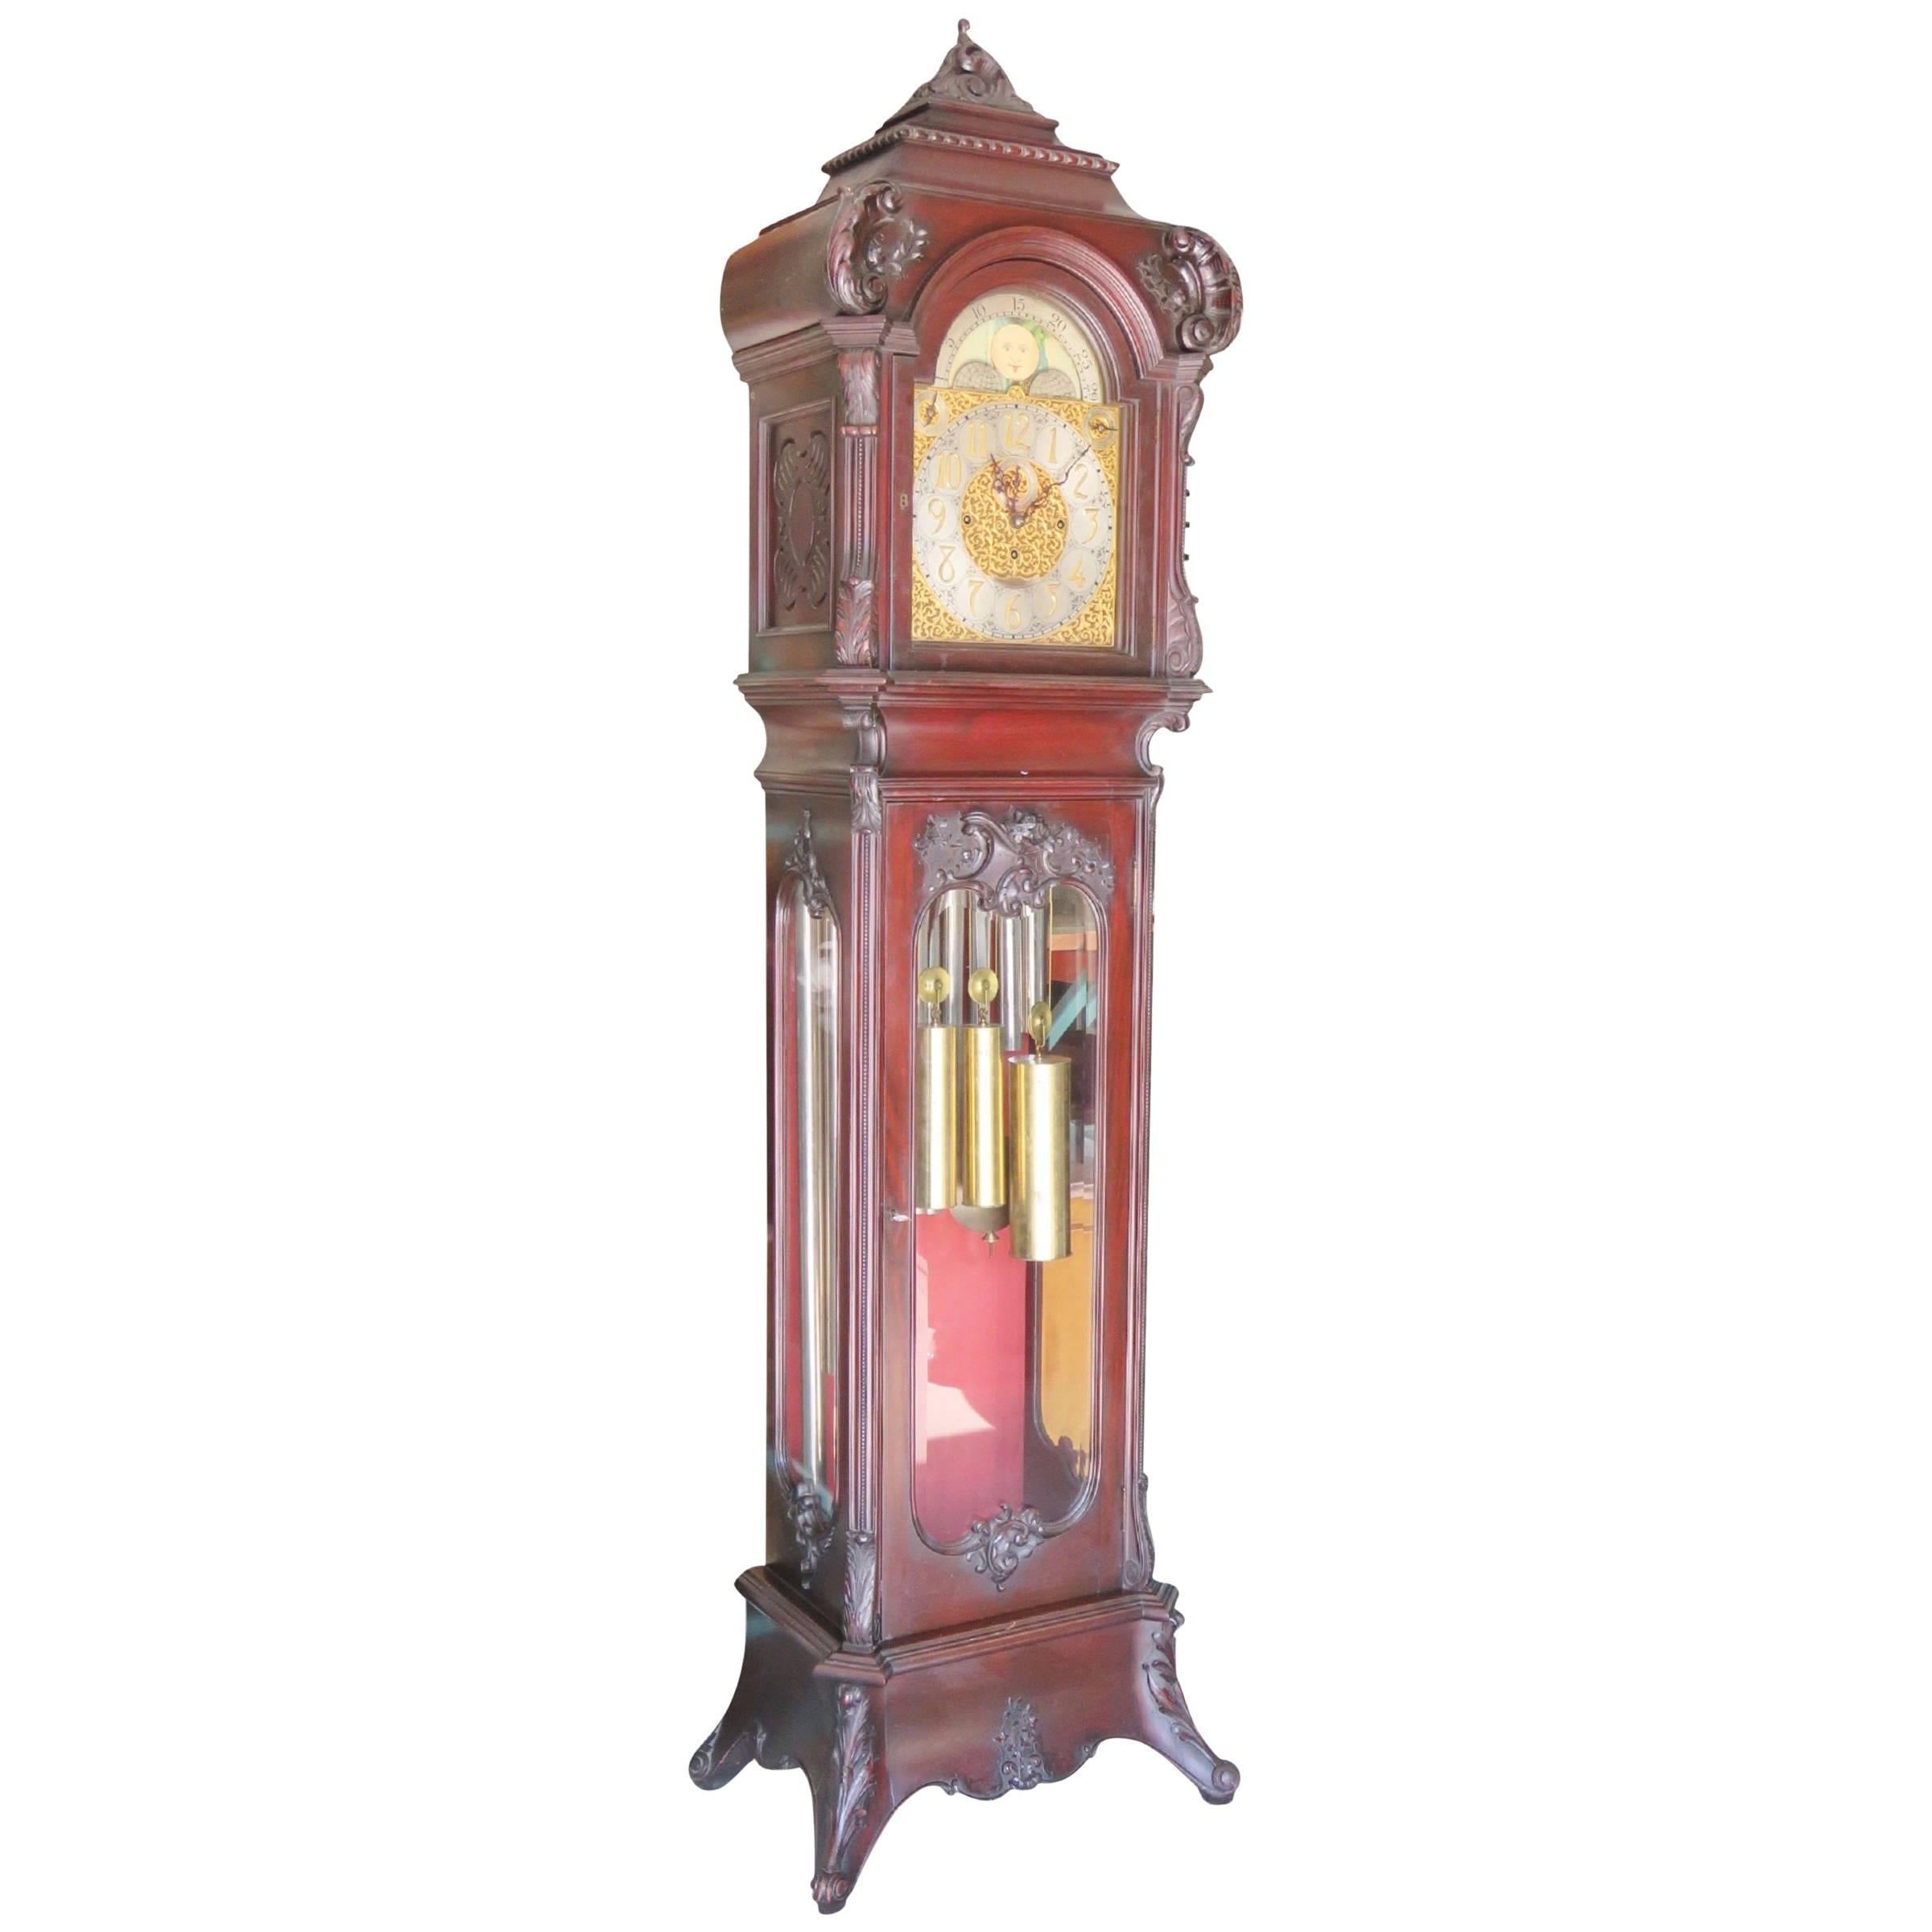 S. Kind & Sons Philadelphia Mahogany Grandfather's Clock